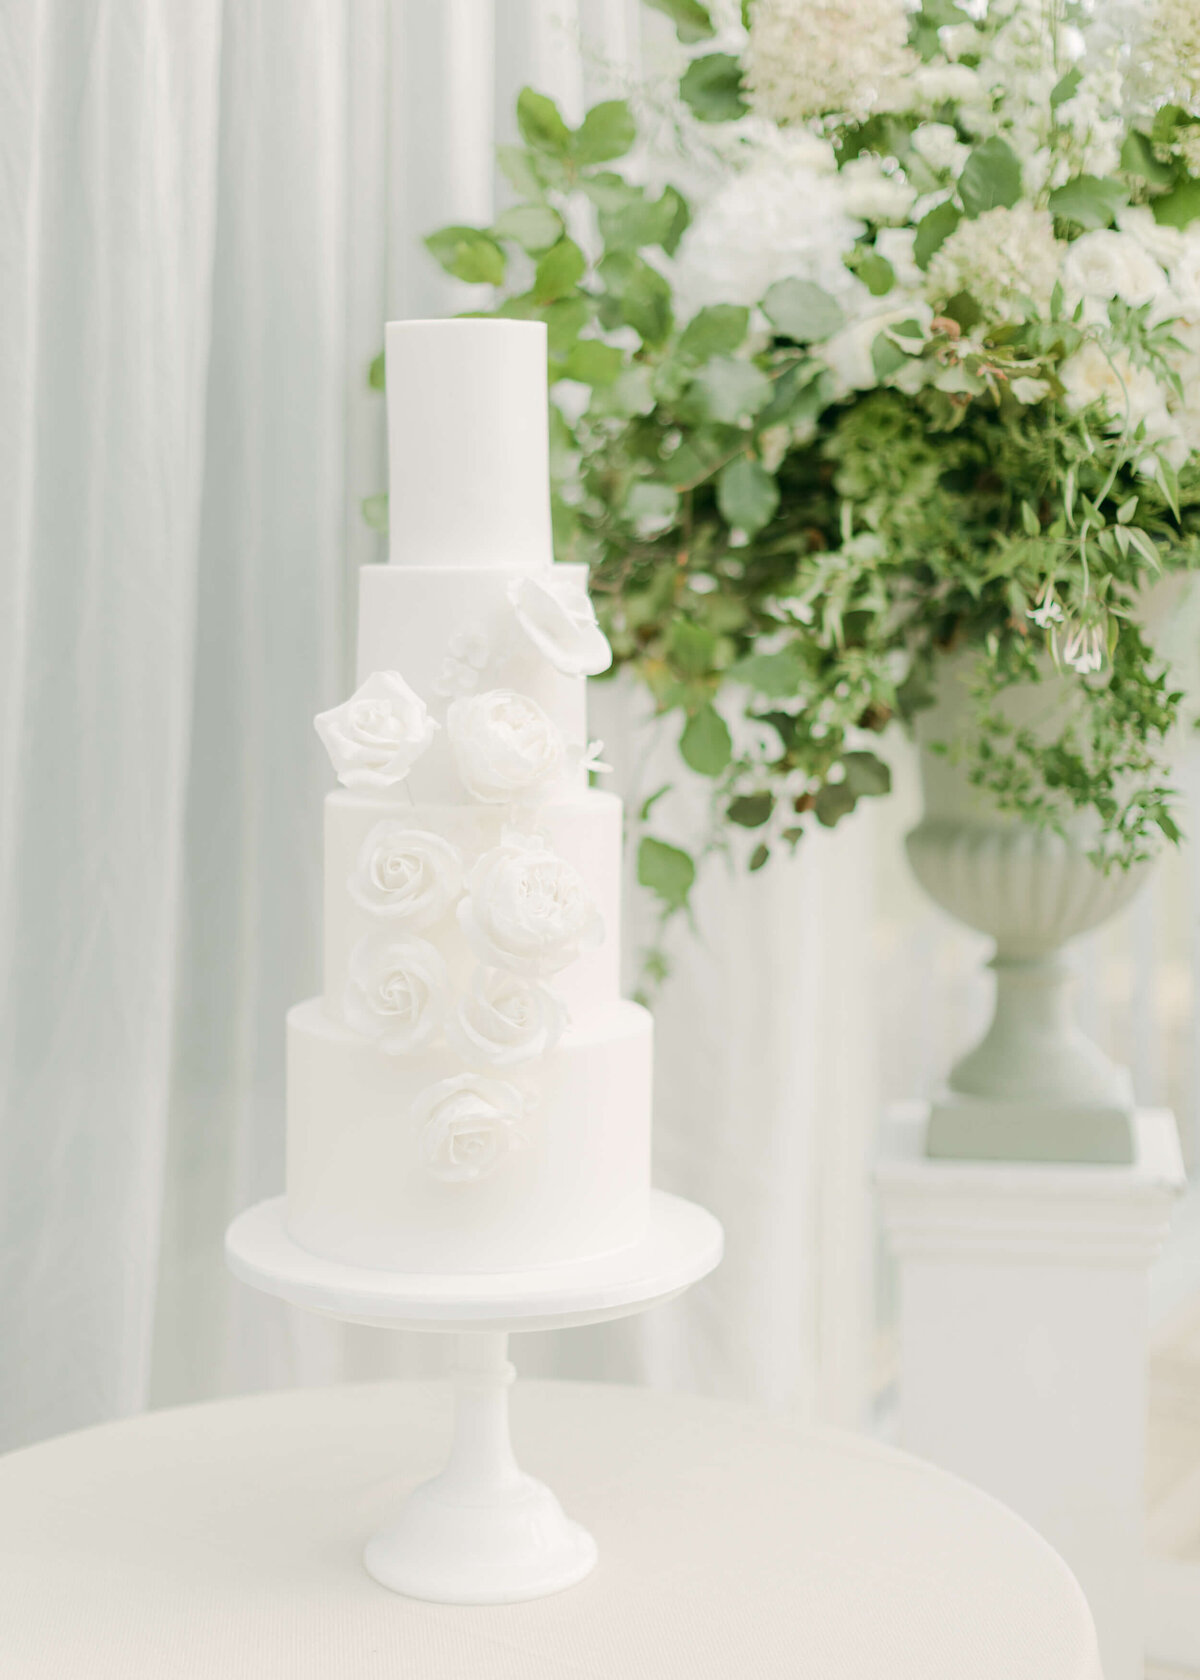 chloe-winstanley-weddings-white-cake